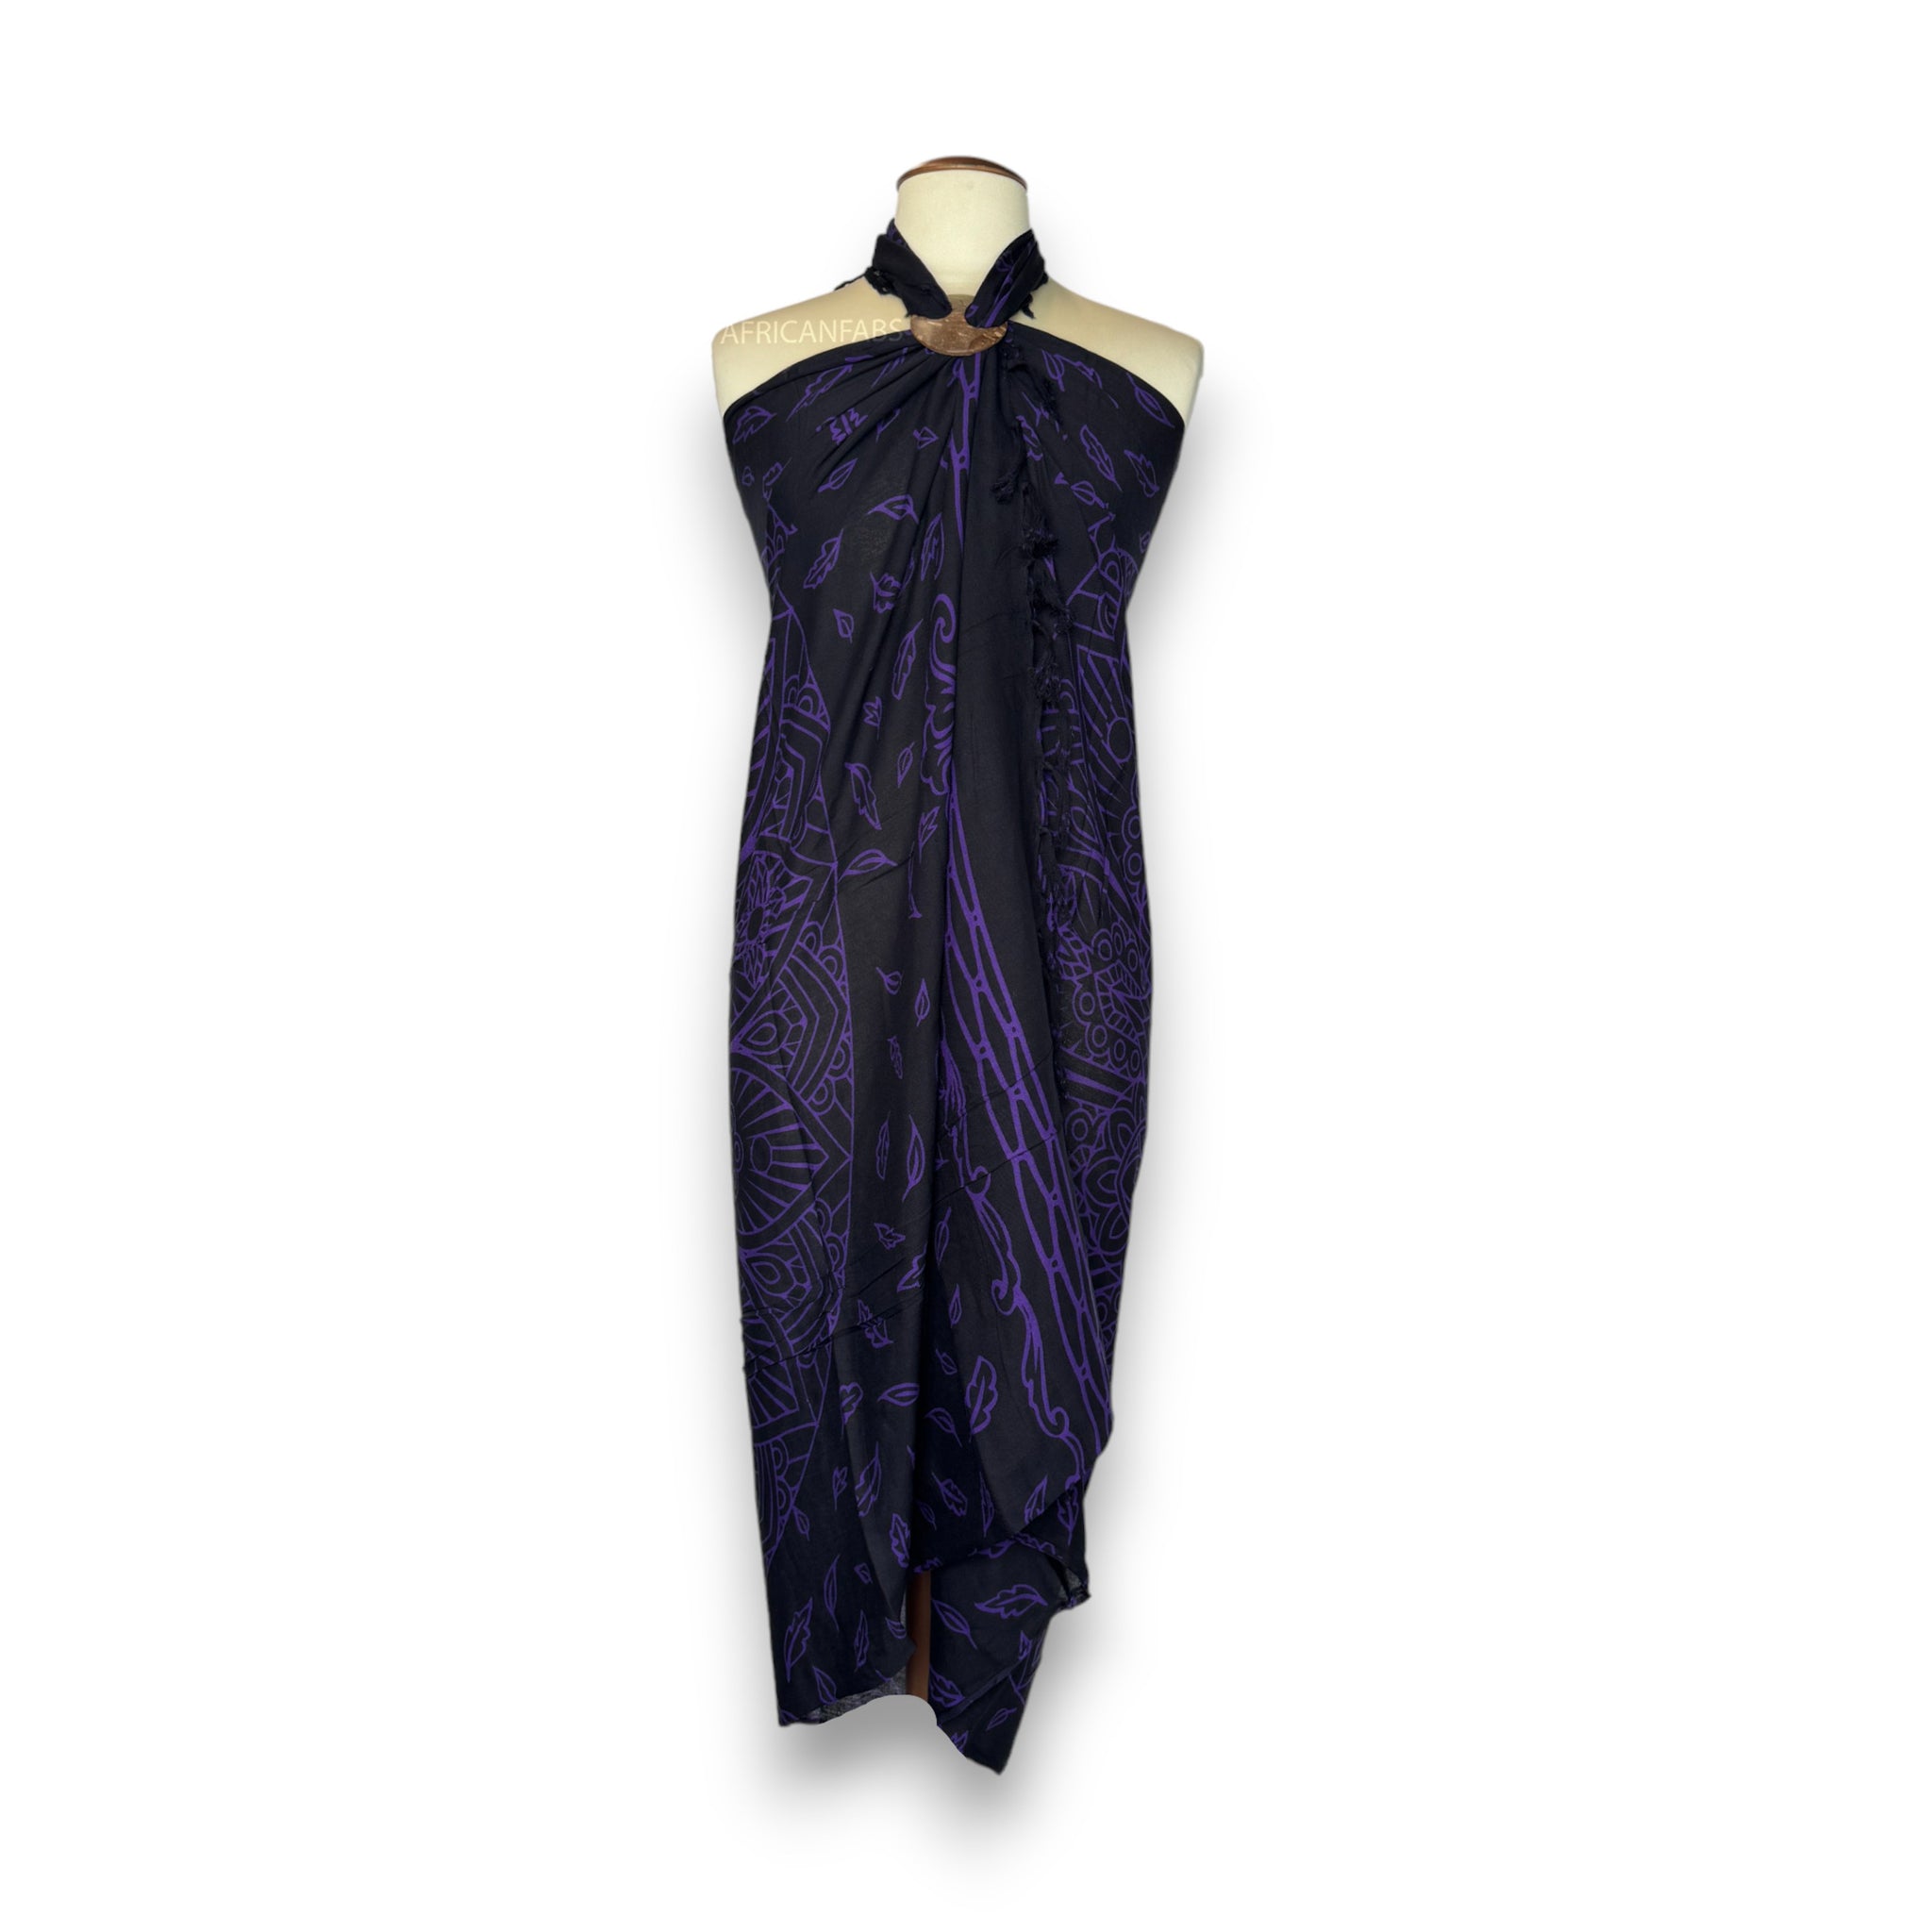 Sarong / pareo - Beachwear wrap skirt - Purple Mandala